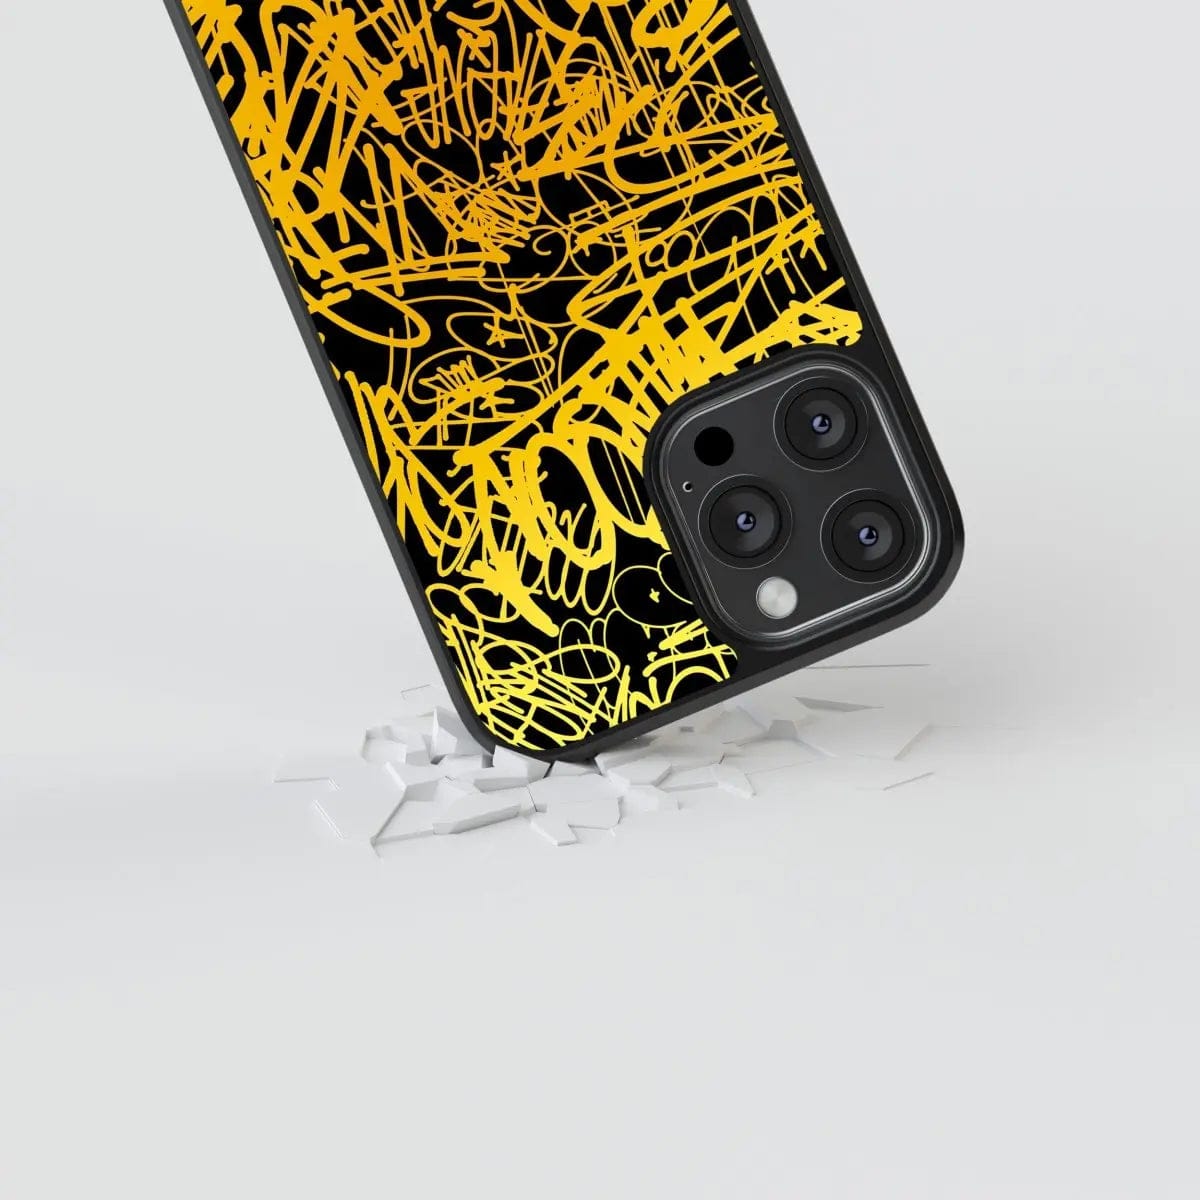 Phone case "Yellow graffiti 1" - Artcase